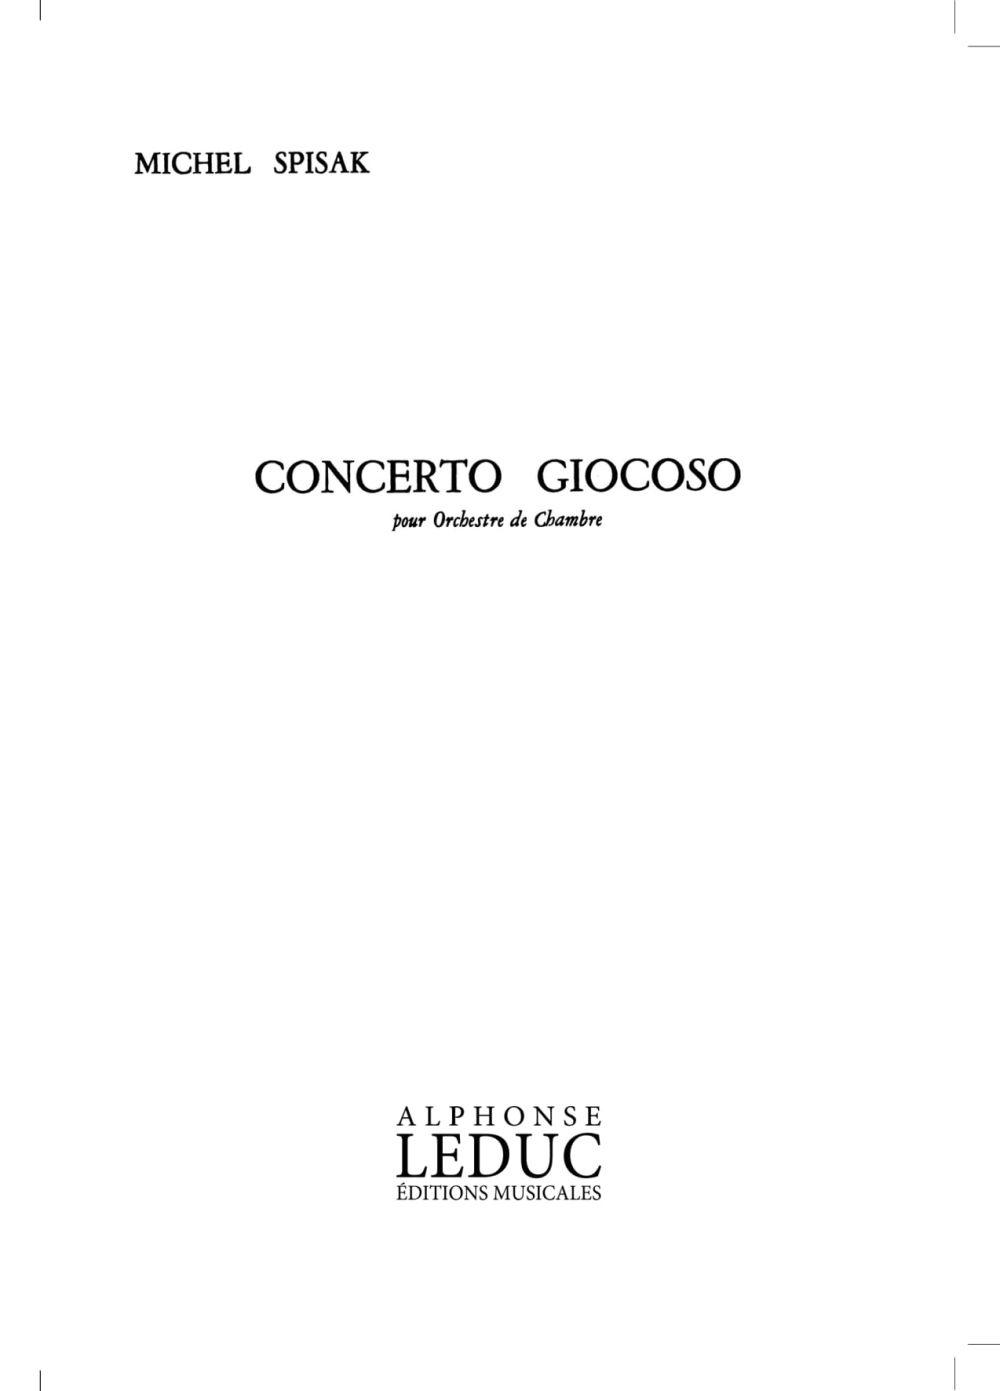 Michal Spisak: Concerto Giocoso